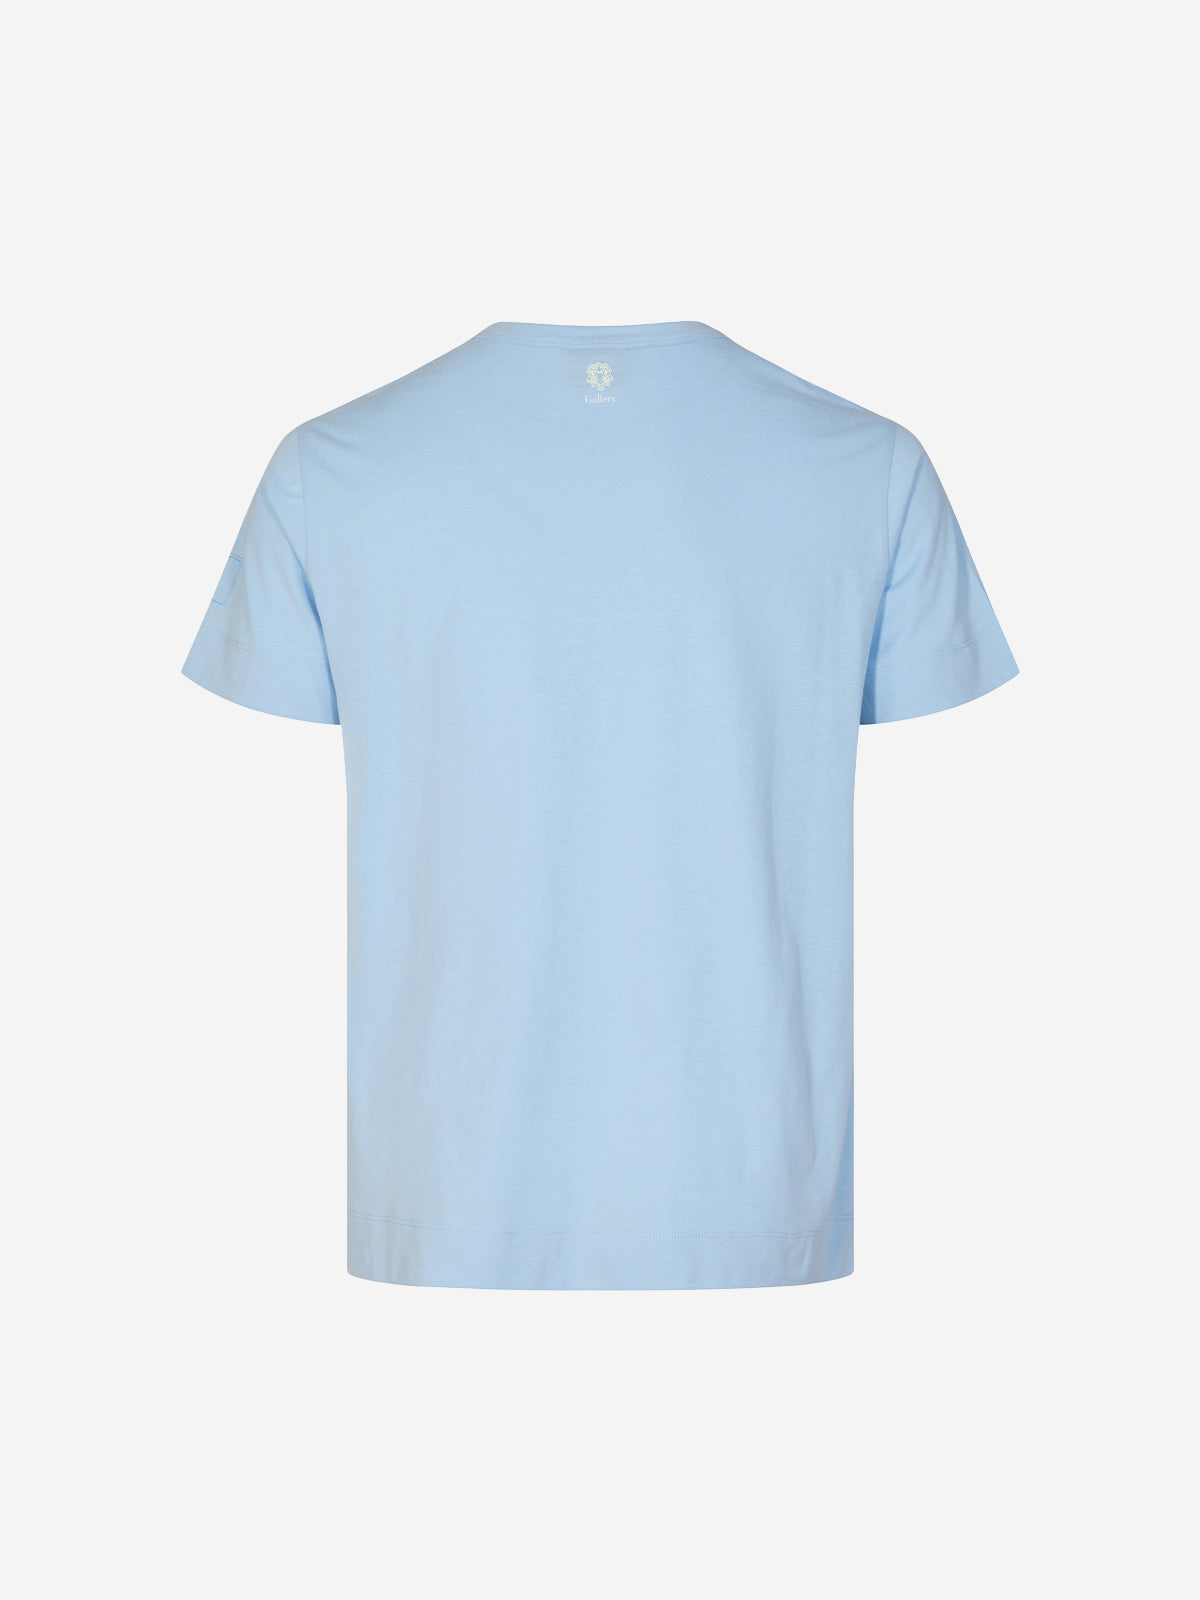 Forte Peach O-SS T-shirt - Sky Blue - Mos Mosh Gallery - Kul og Koks